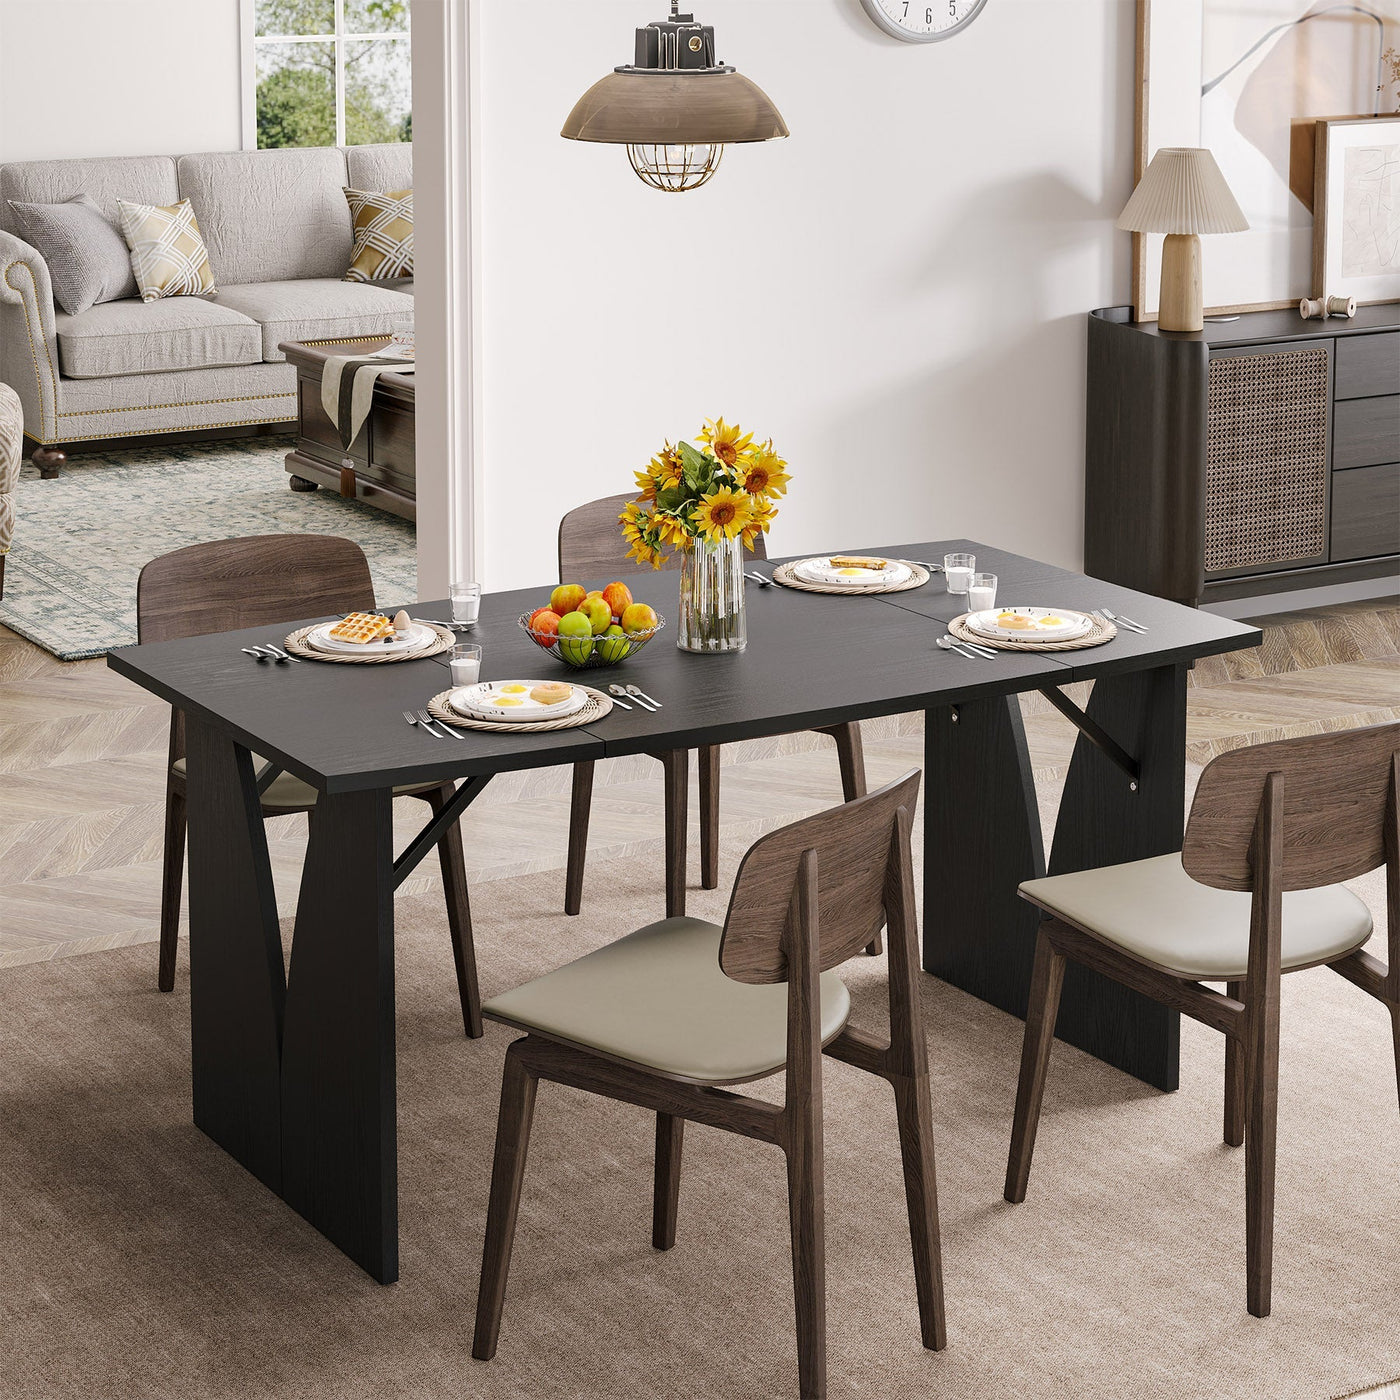 Mesa de comedor Celine negra | Mesa de cocina de madera rectangular moderna para 4-6 personas